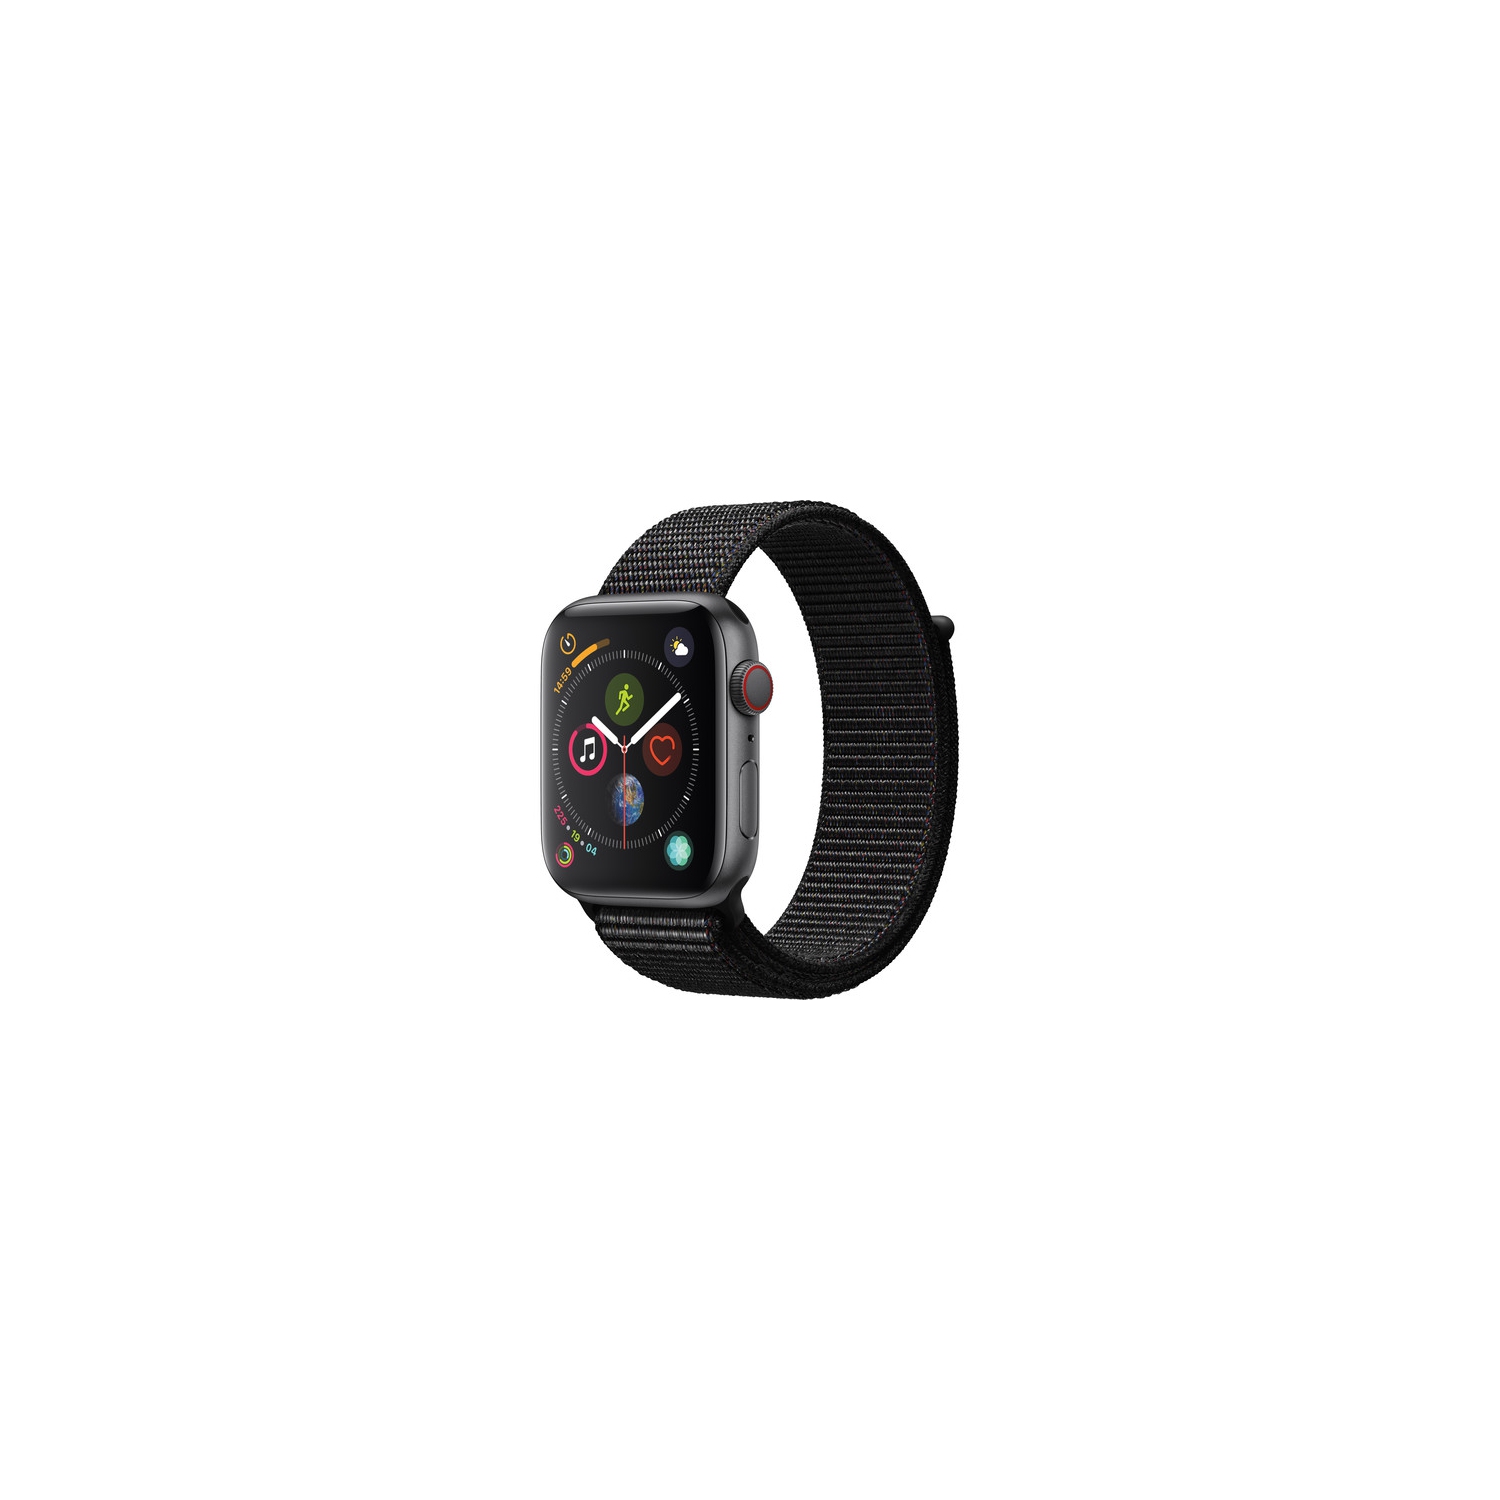 Apple Watch Series 4, 40mm, GPS + Cellular, Space Grey Aluminium Case with Black Sport Loop